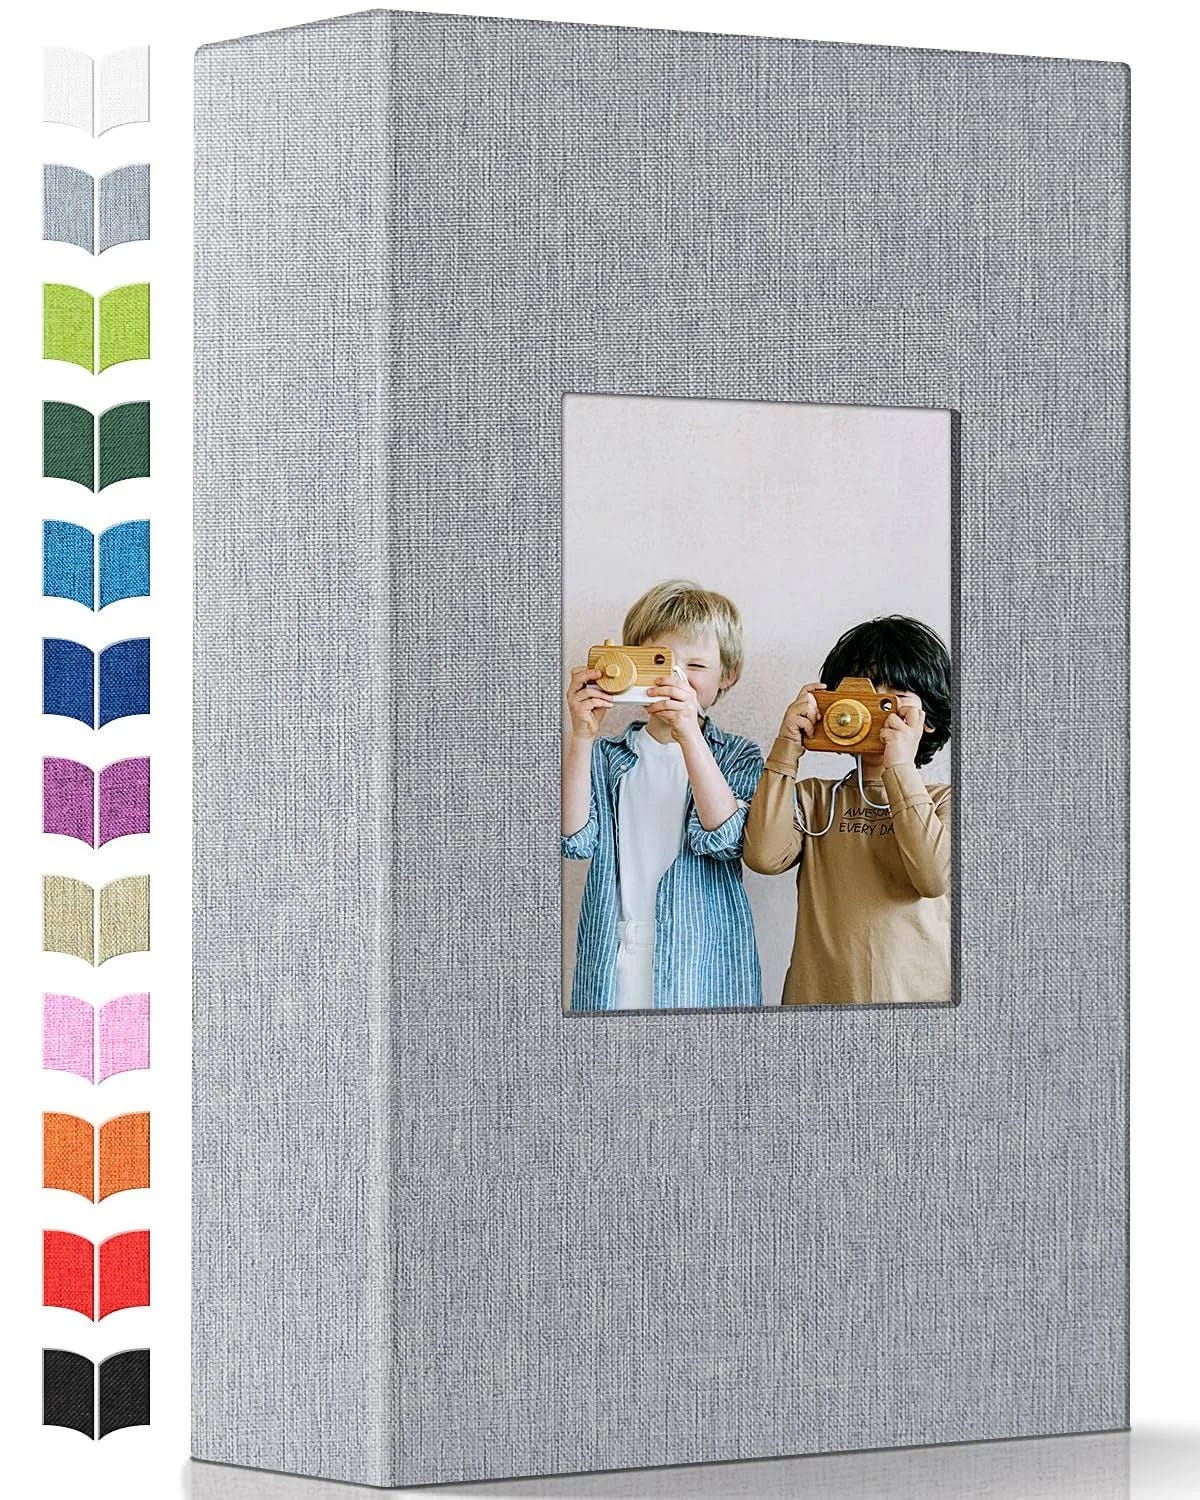 Artfeel 4x6 Photo Album with 300 Pockets - Linen Cover Memory Book for Precious Memories | Image